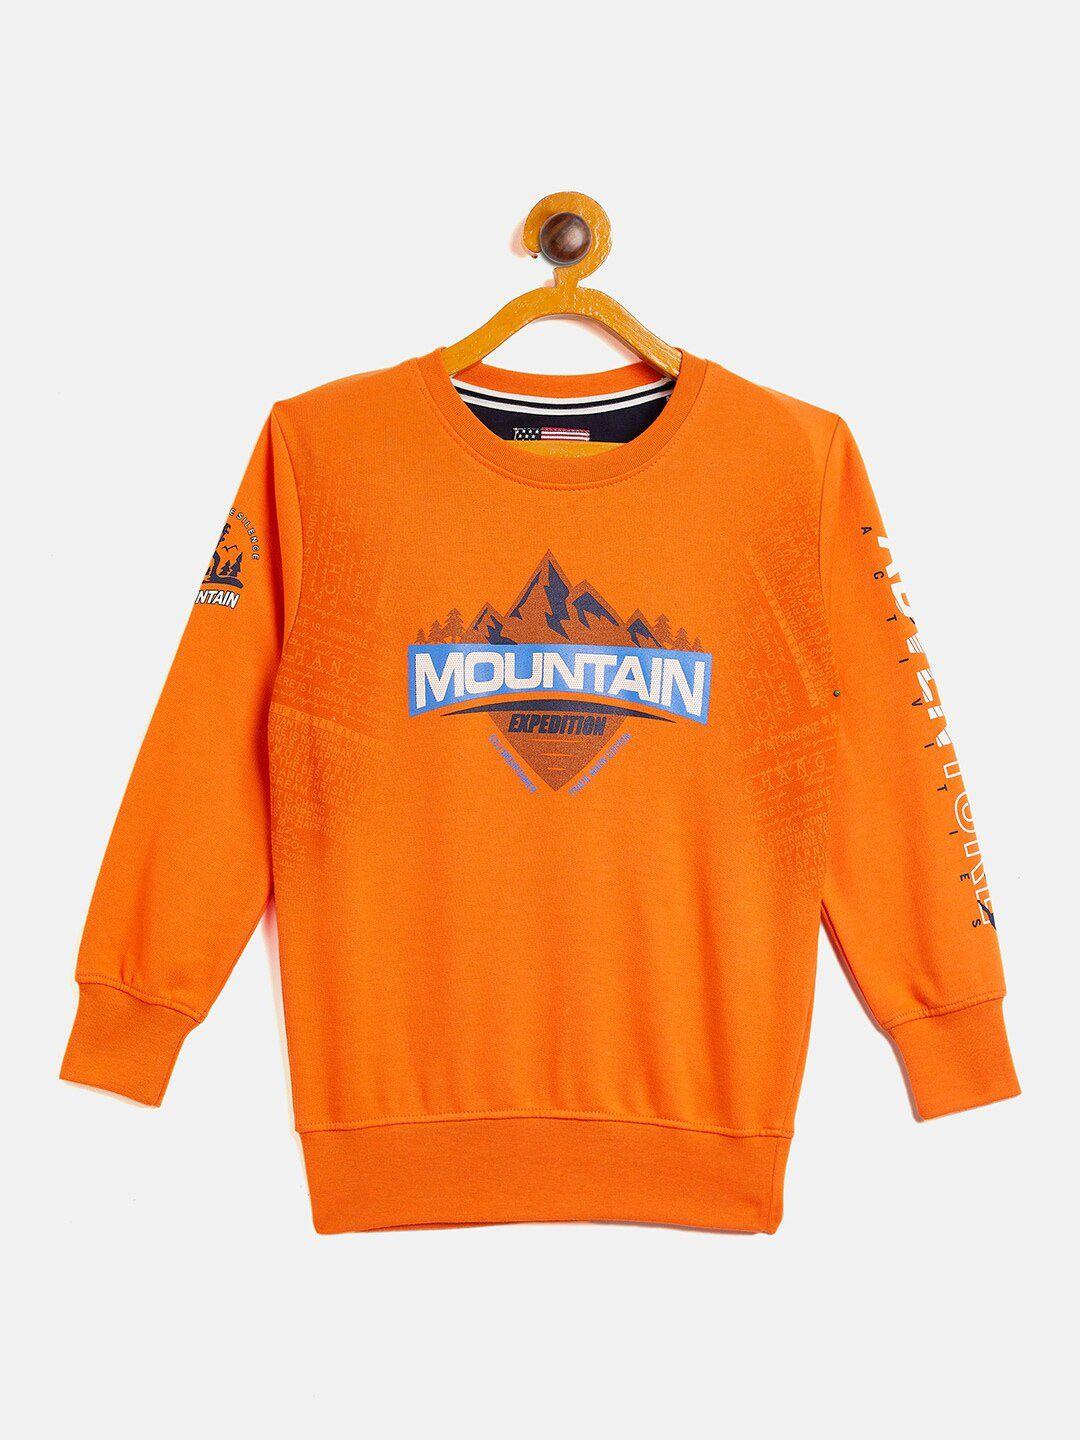 Duke Boys Orange Printed Sweatshirt